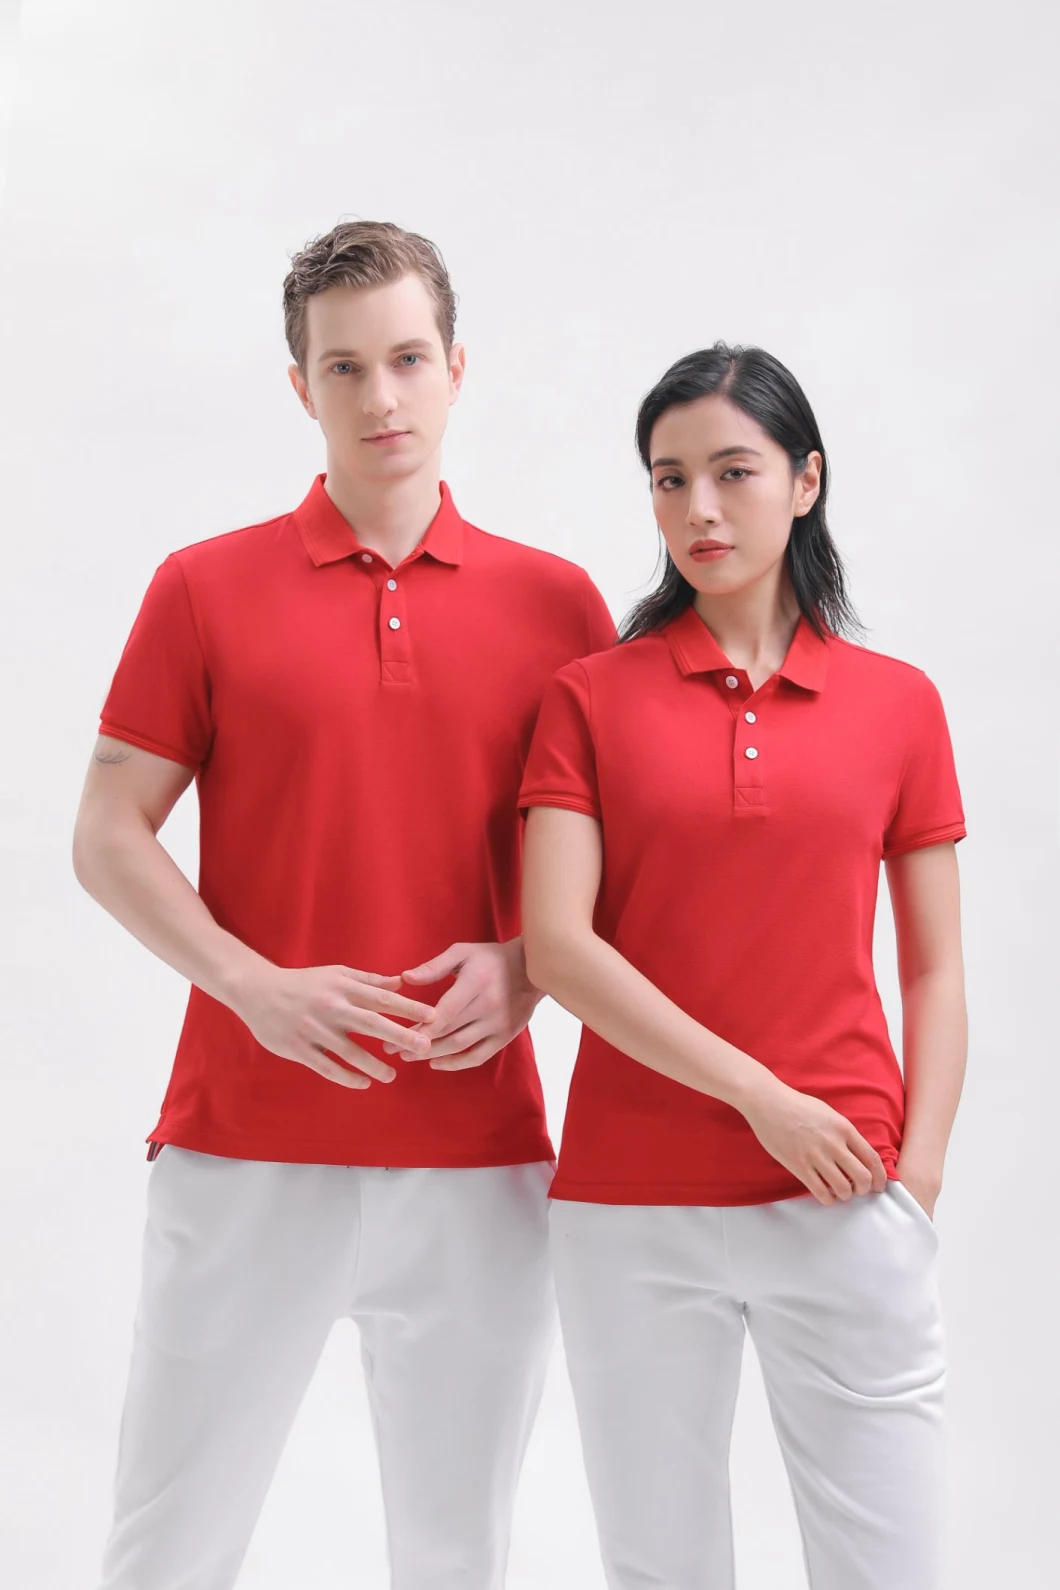 Golf T Shirt Mens T Shirt White T-Shirt 100% Cotton